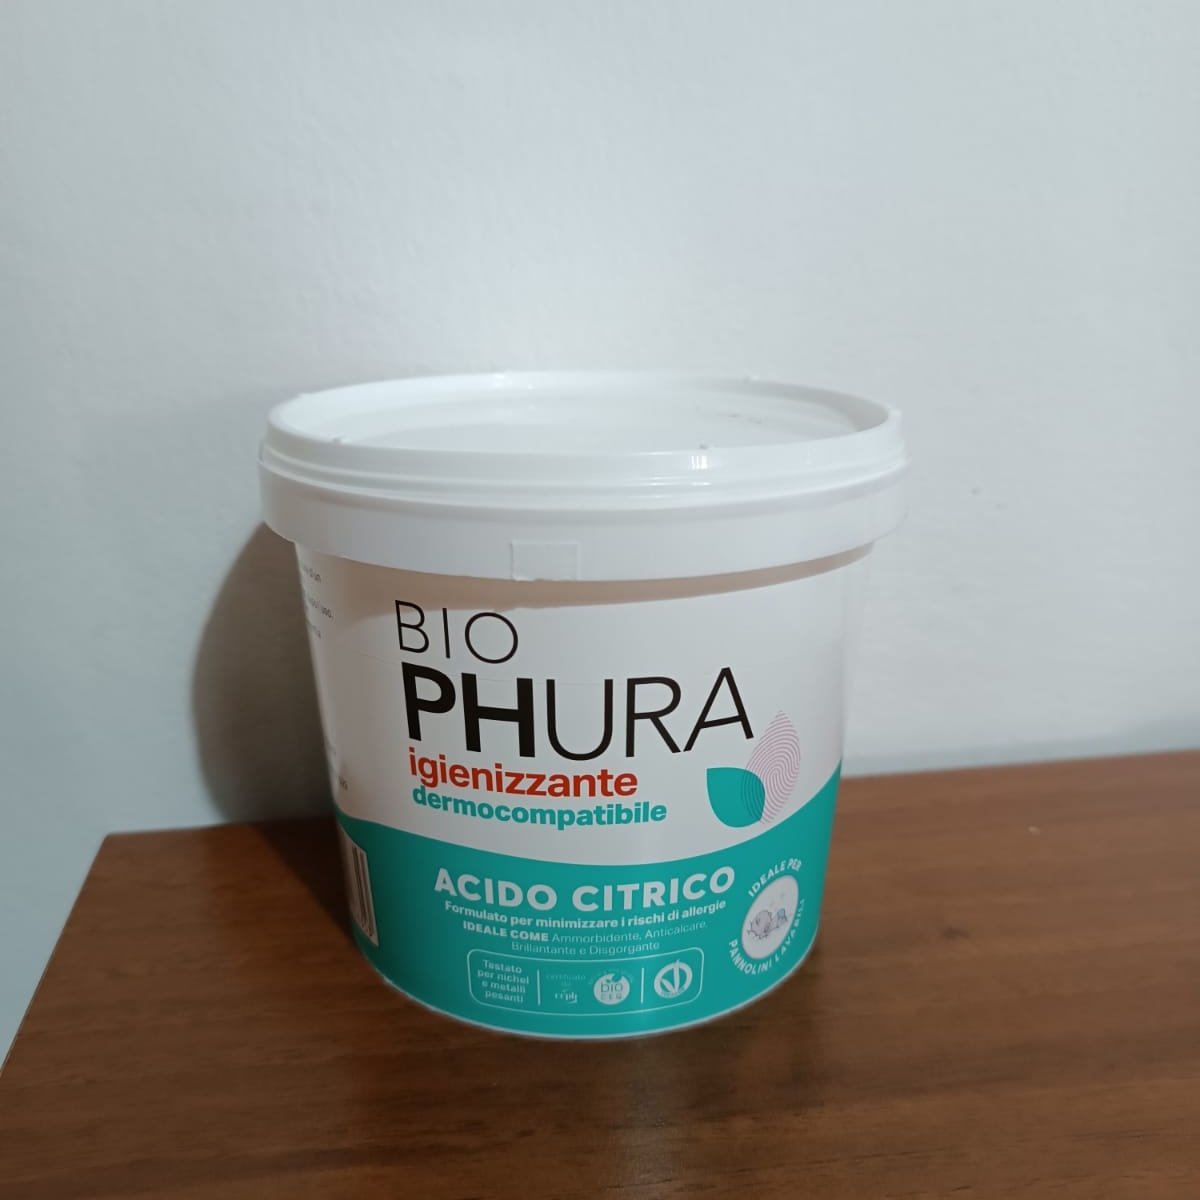 Bio Phura Acido citrico Reviews | abillion